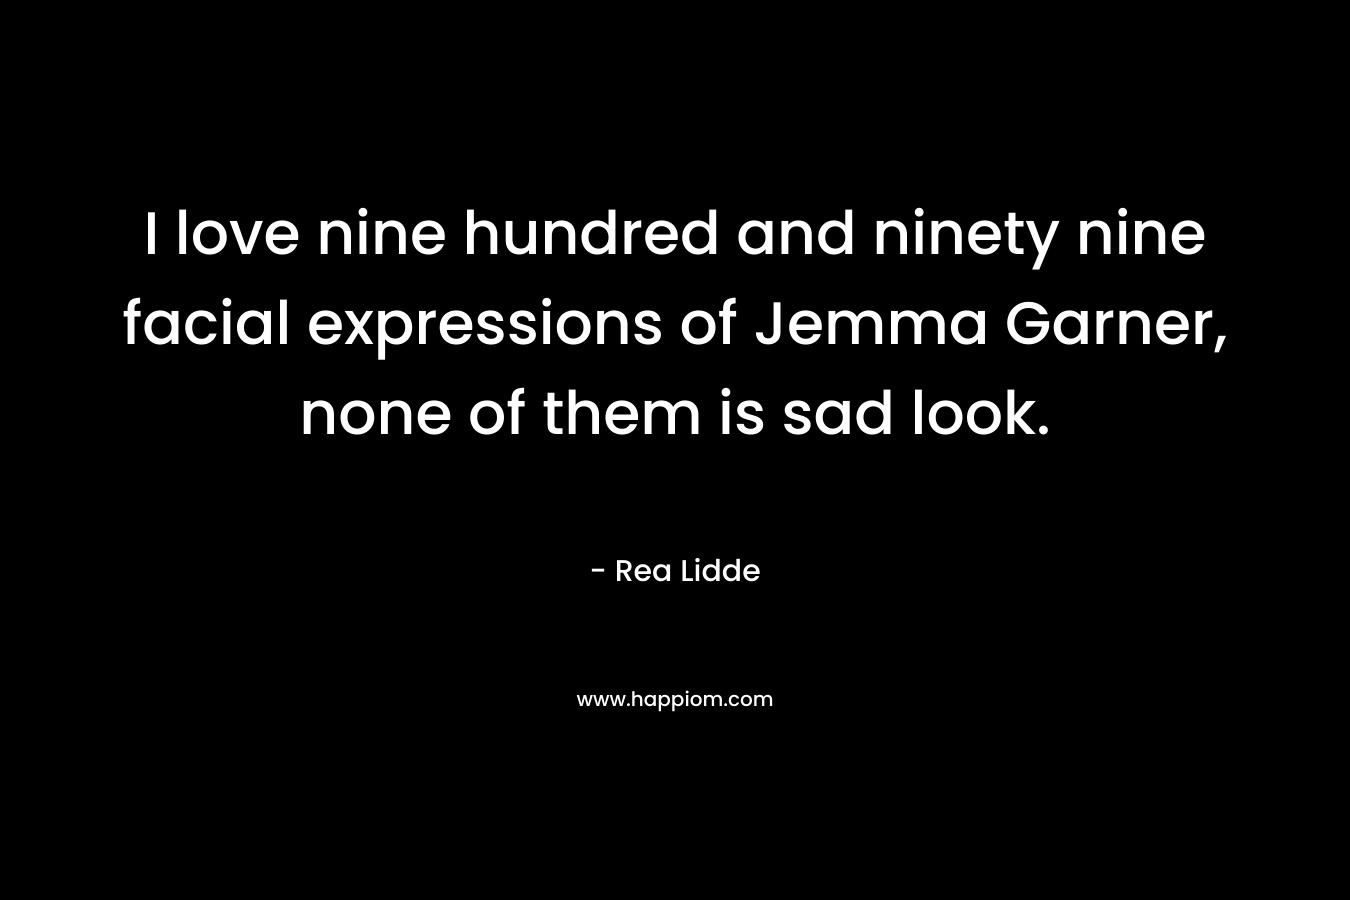 I love nine hundred and ninety nine facial expressions of Jemma Garner, none of them is sad look.